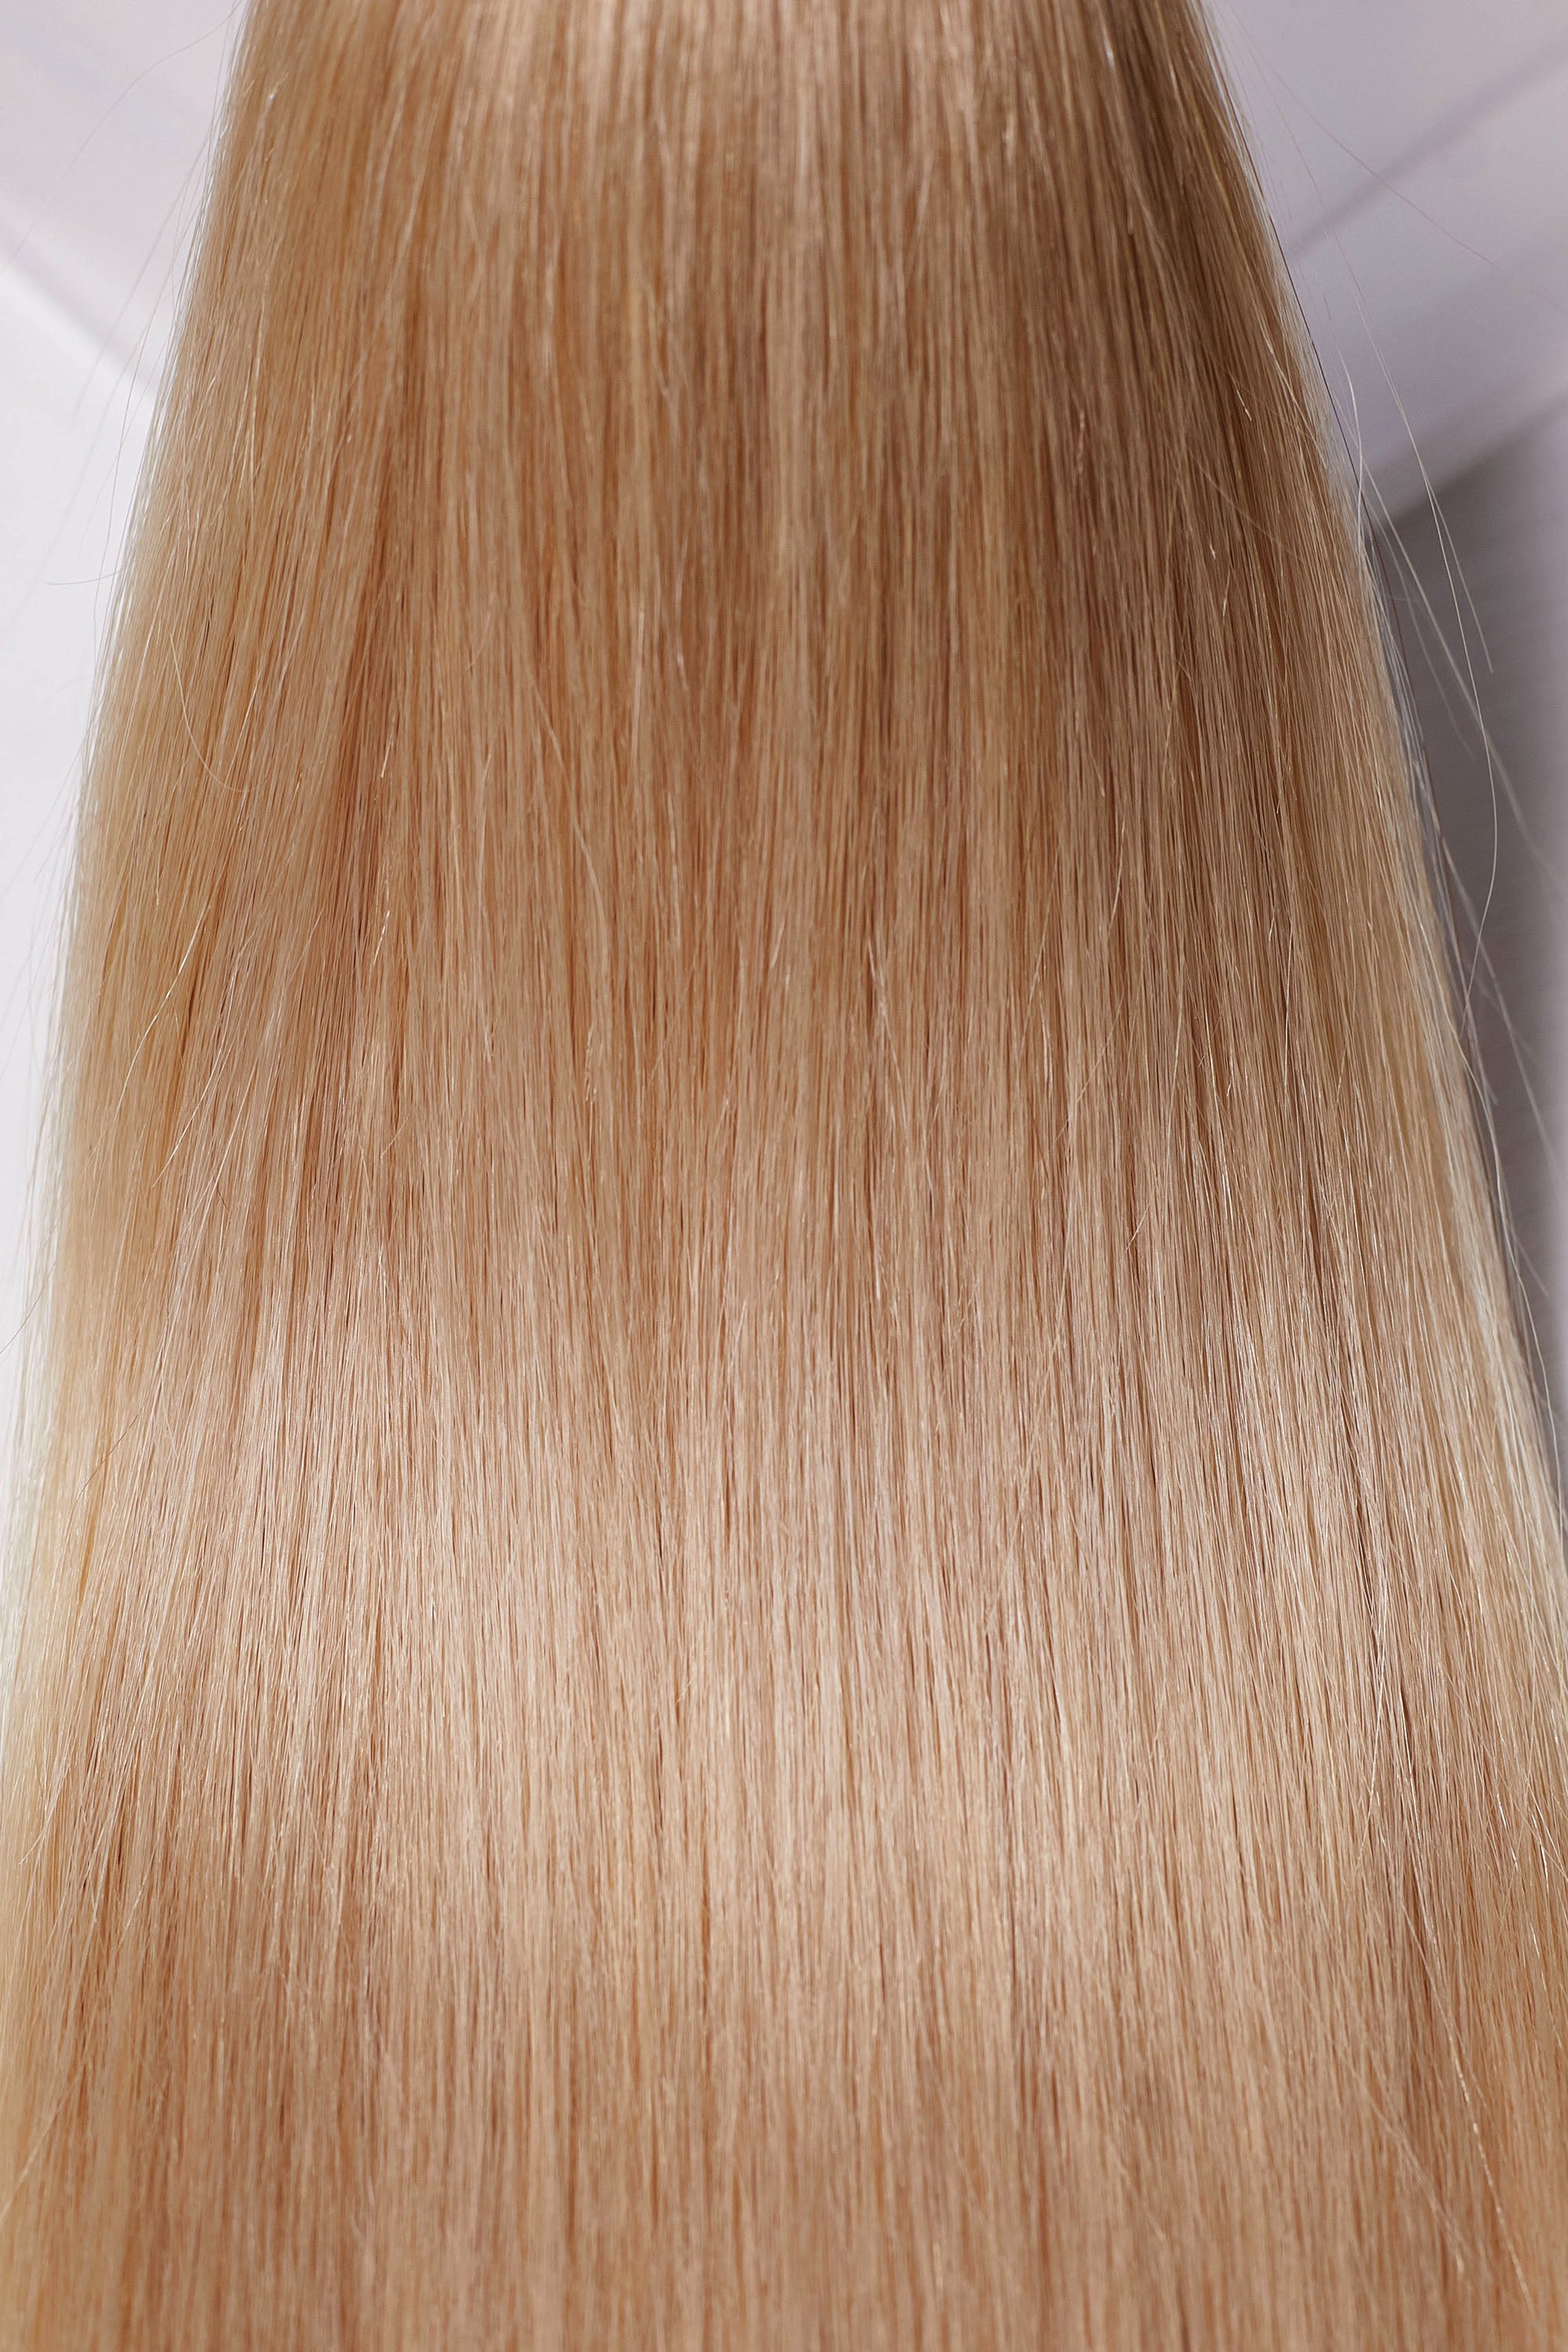 Behair professional Keratin Tip "Premium" 24" (60cm) Natural Straight Light Gold Sand #16 - 25g (Micro - 0.5g each pcs) hair extensions